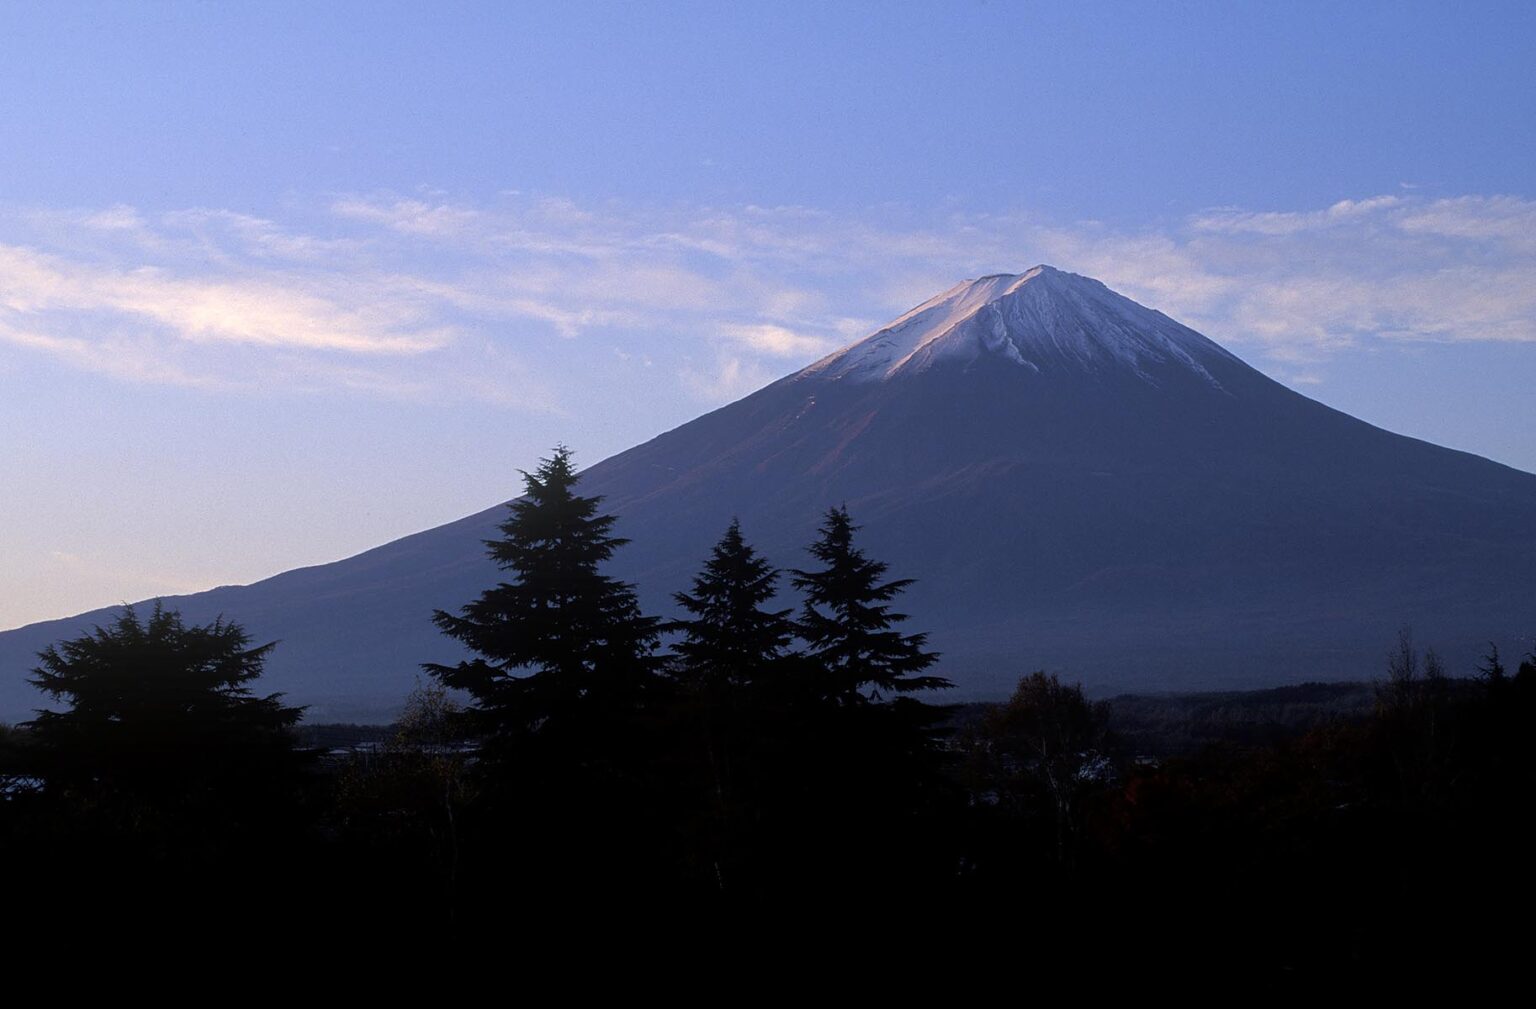 Sunrise on MOUNT FUJI which is considered sacred by the JAPANESE - FUJI HAKONE-IZU NATIONAL PARK